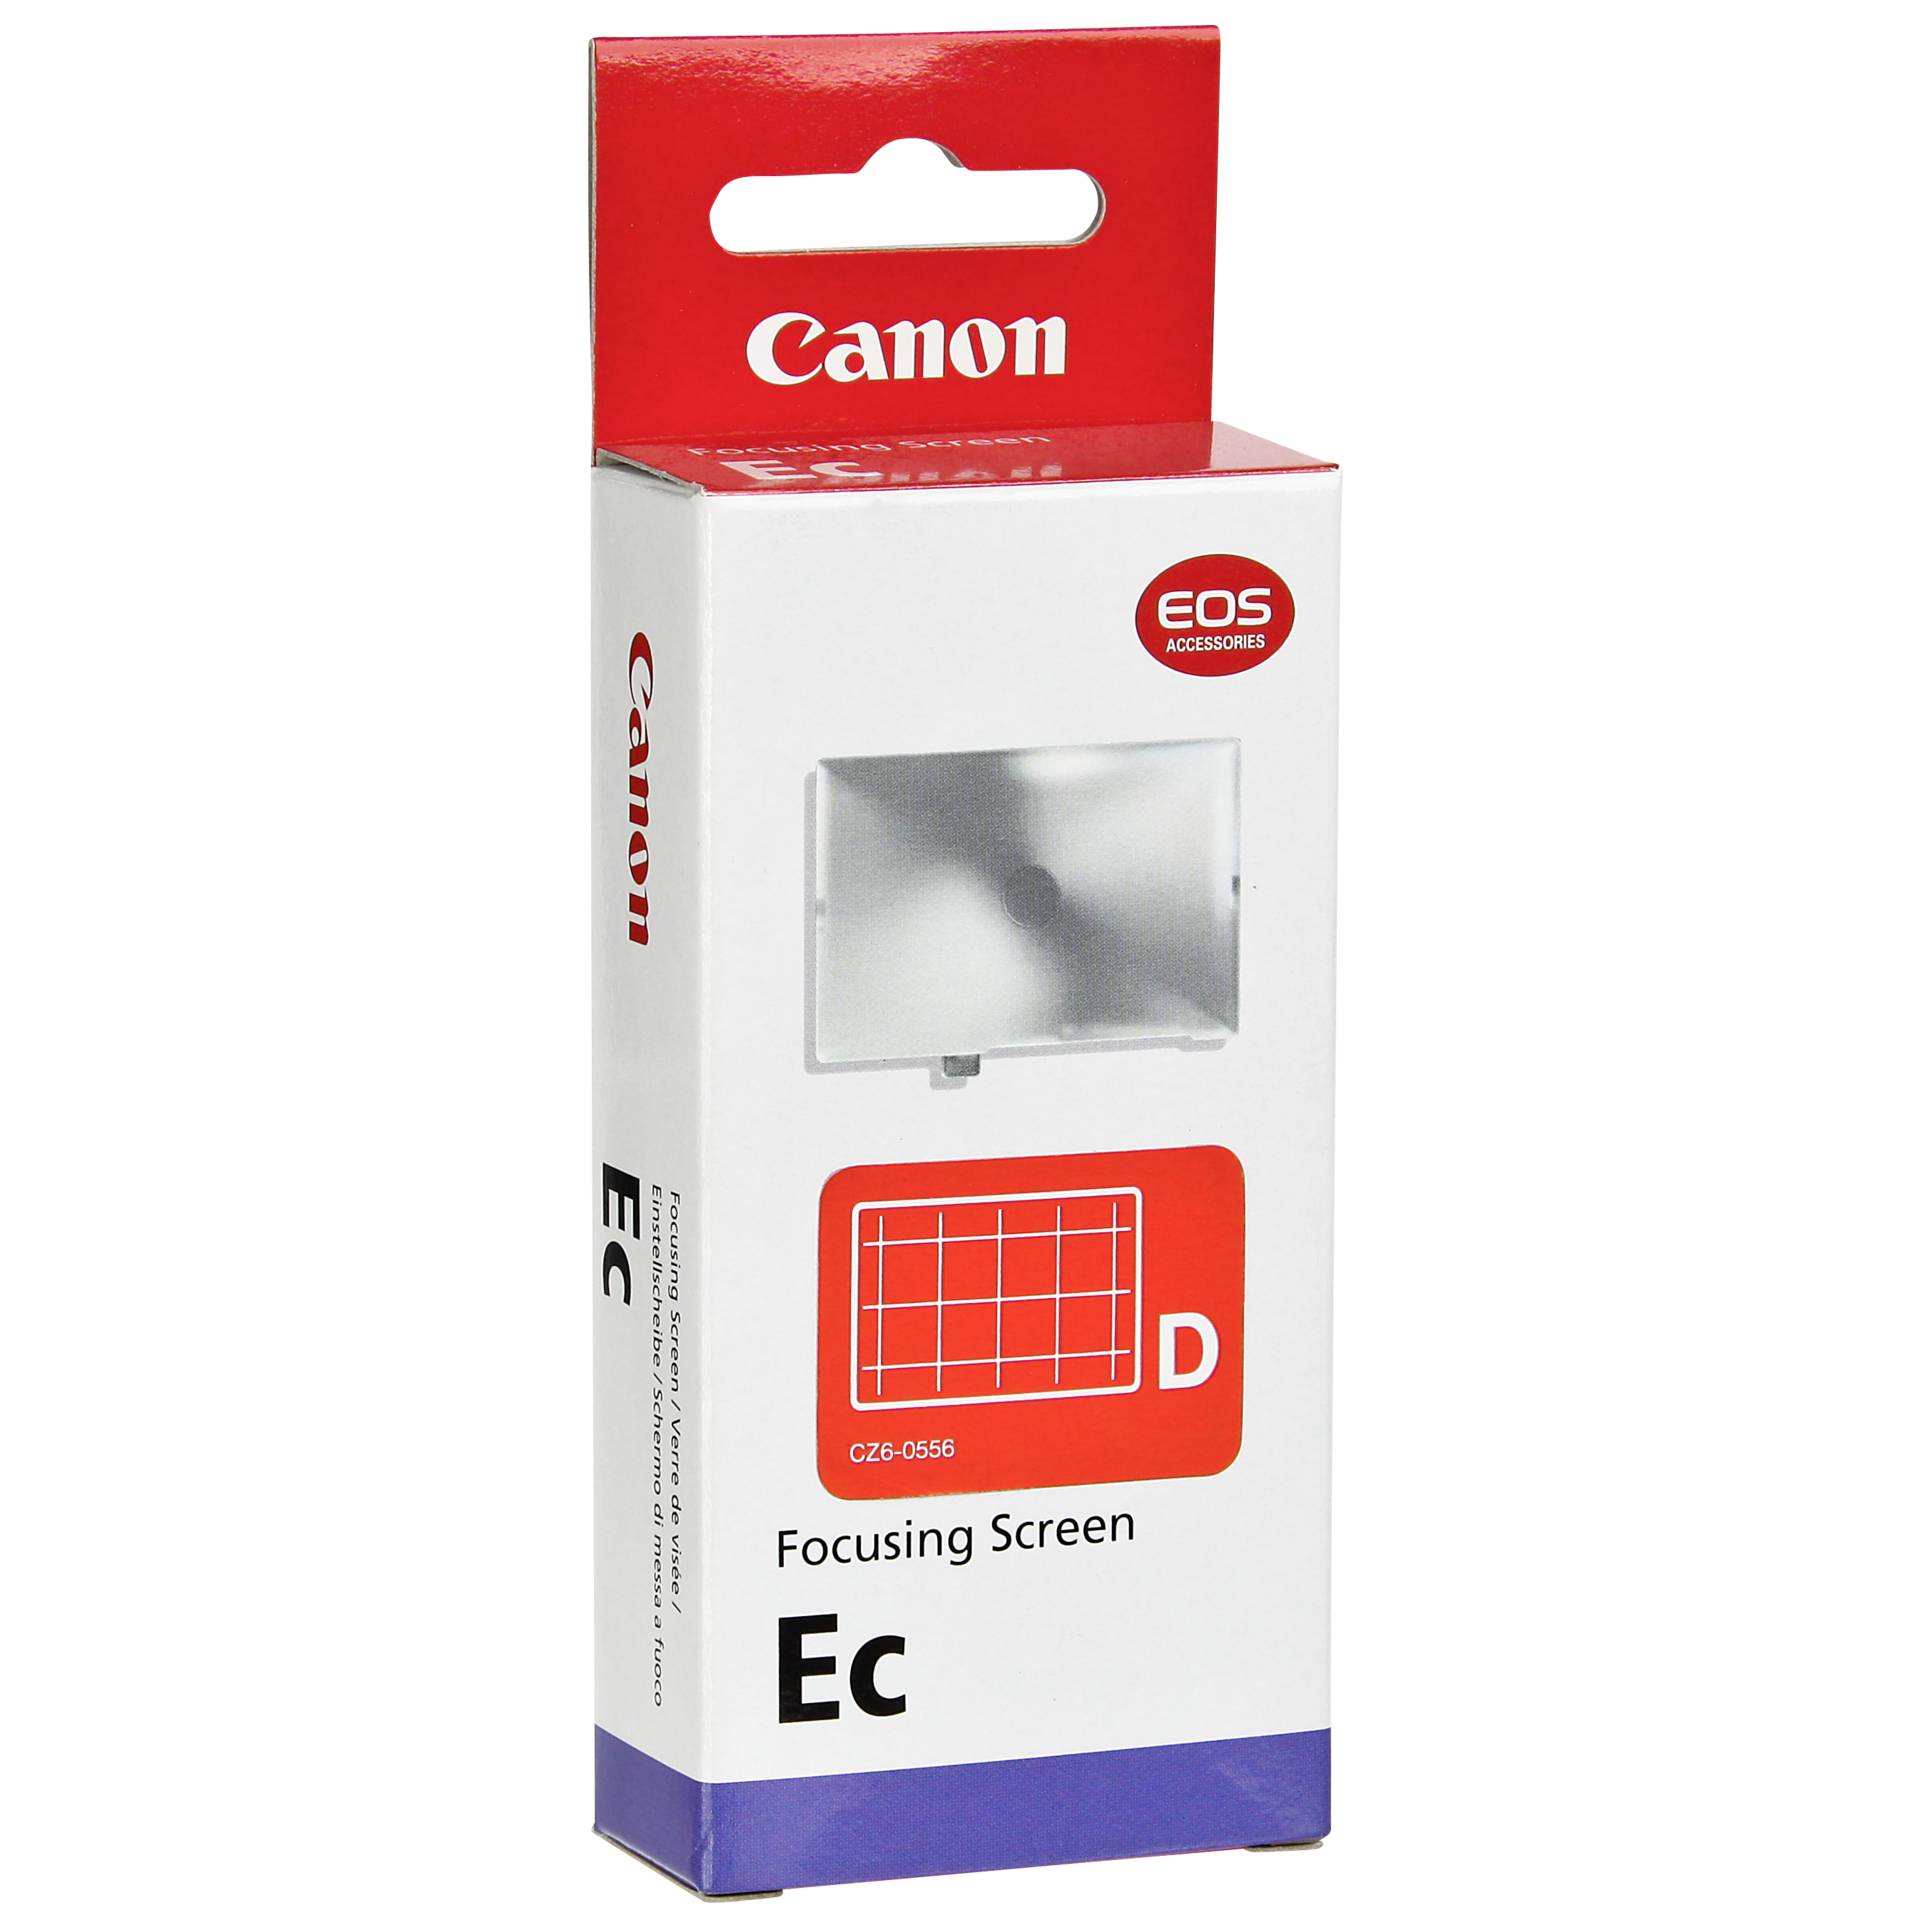 Canon focusing screen Ec-D